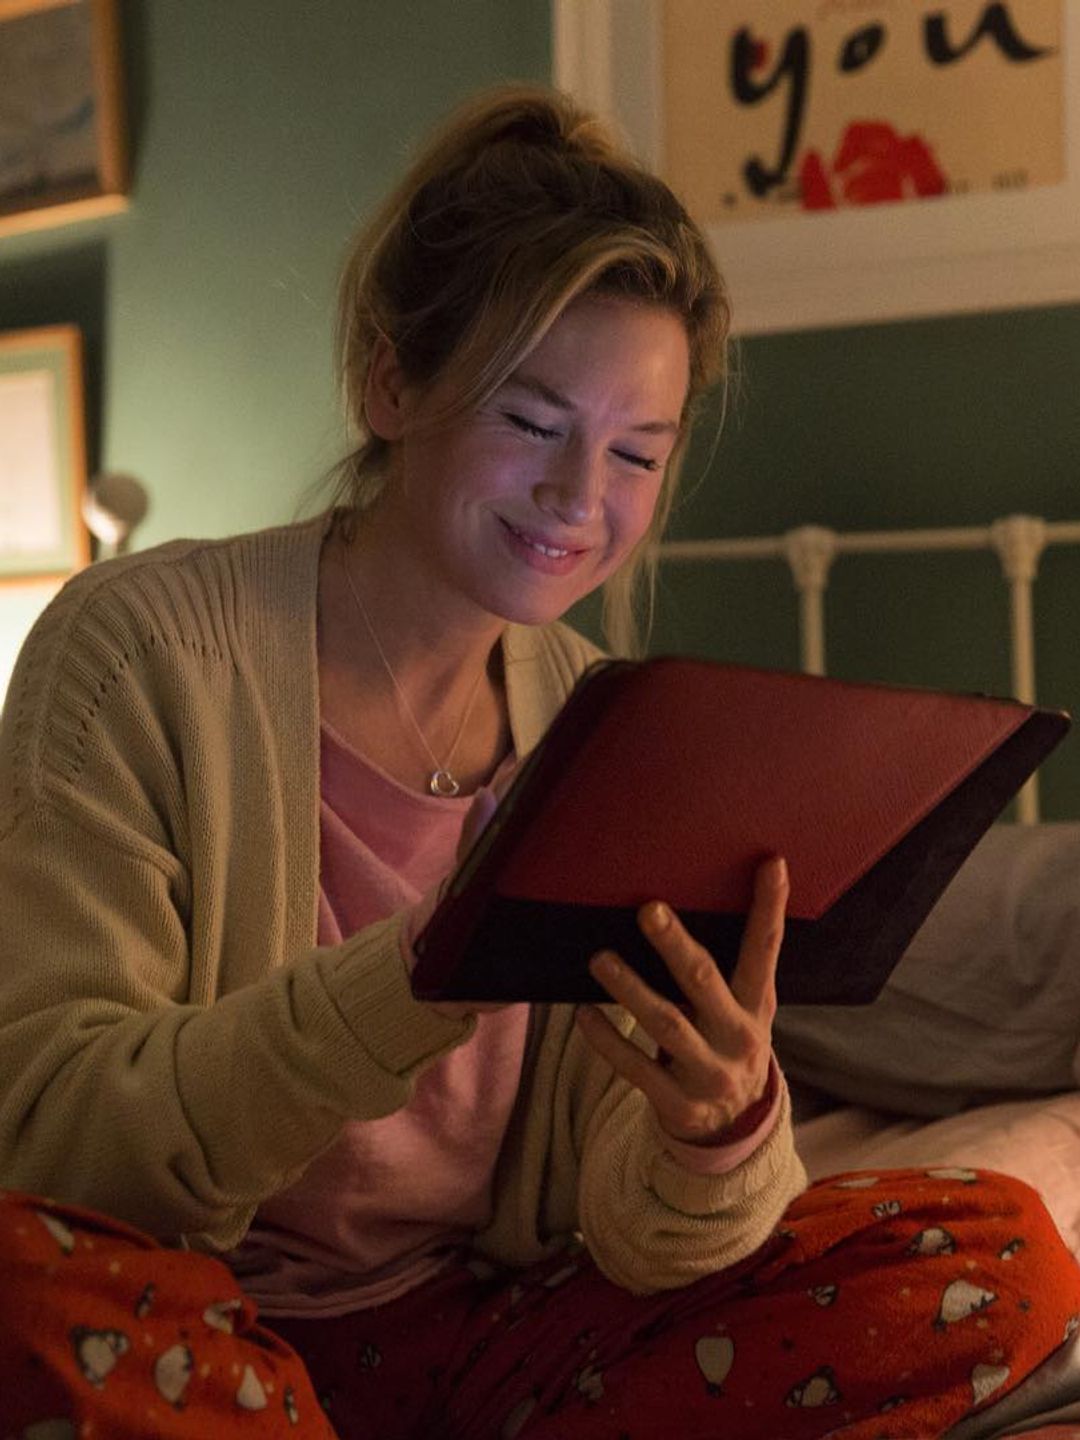 A still from Bridget Jones where actress Renee Zellweger wears pyjamas to sit on her bed